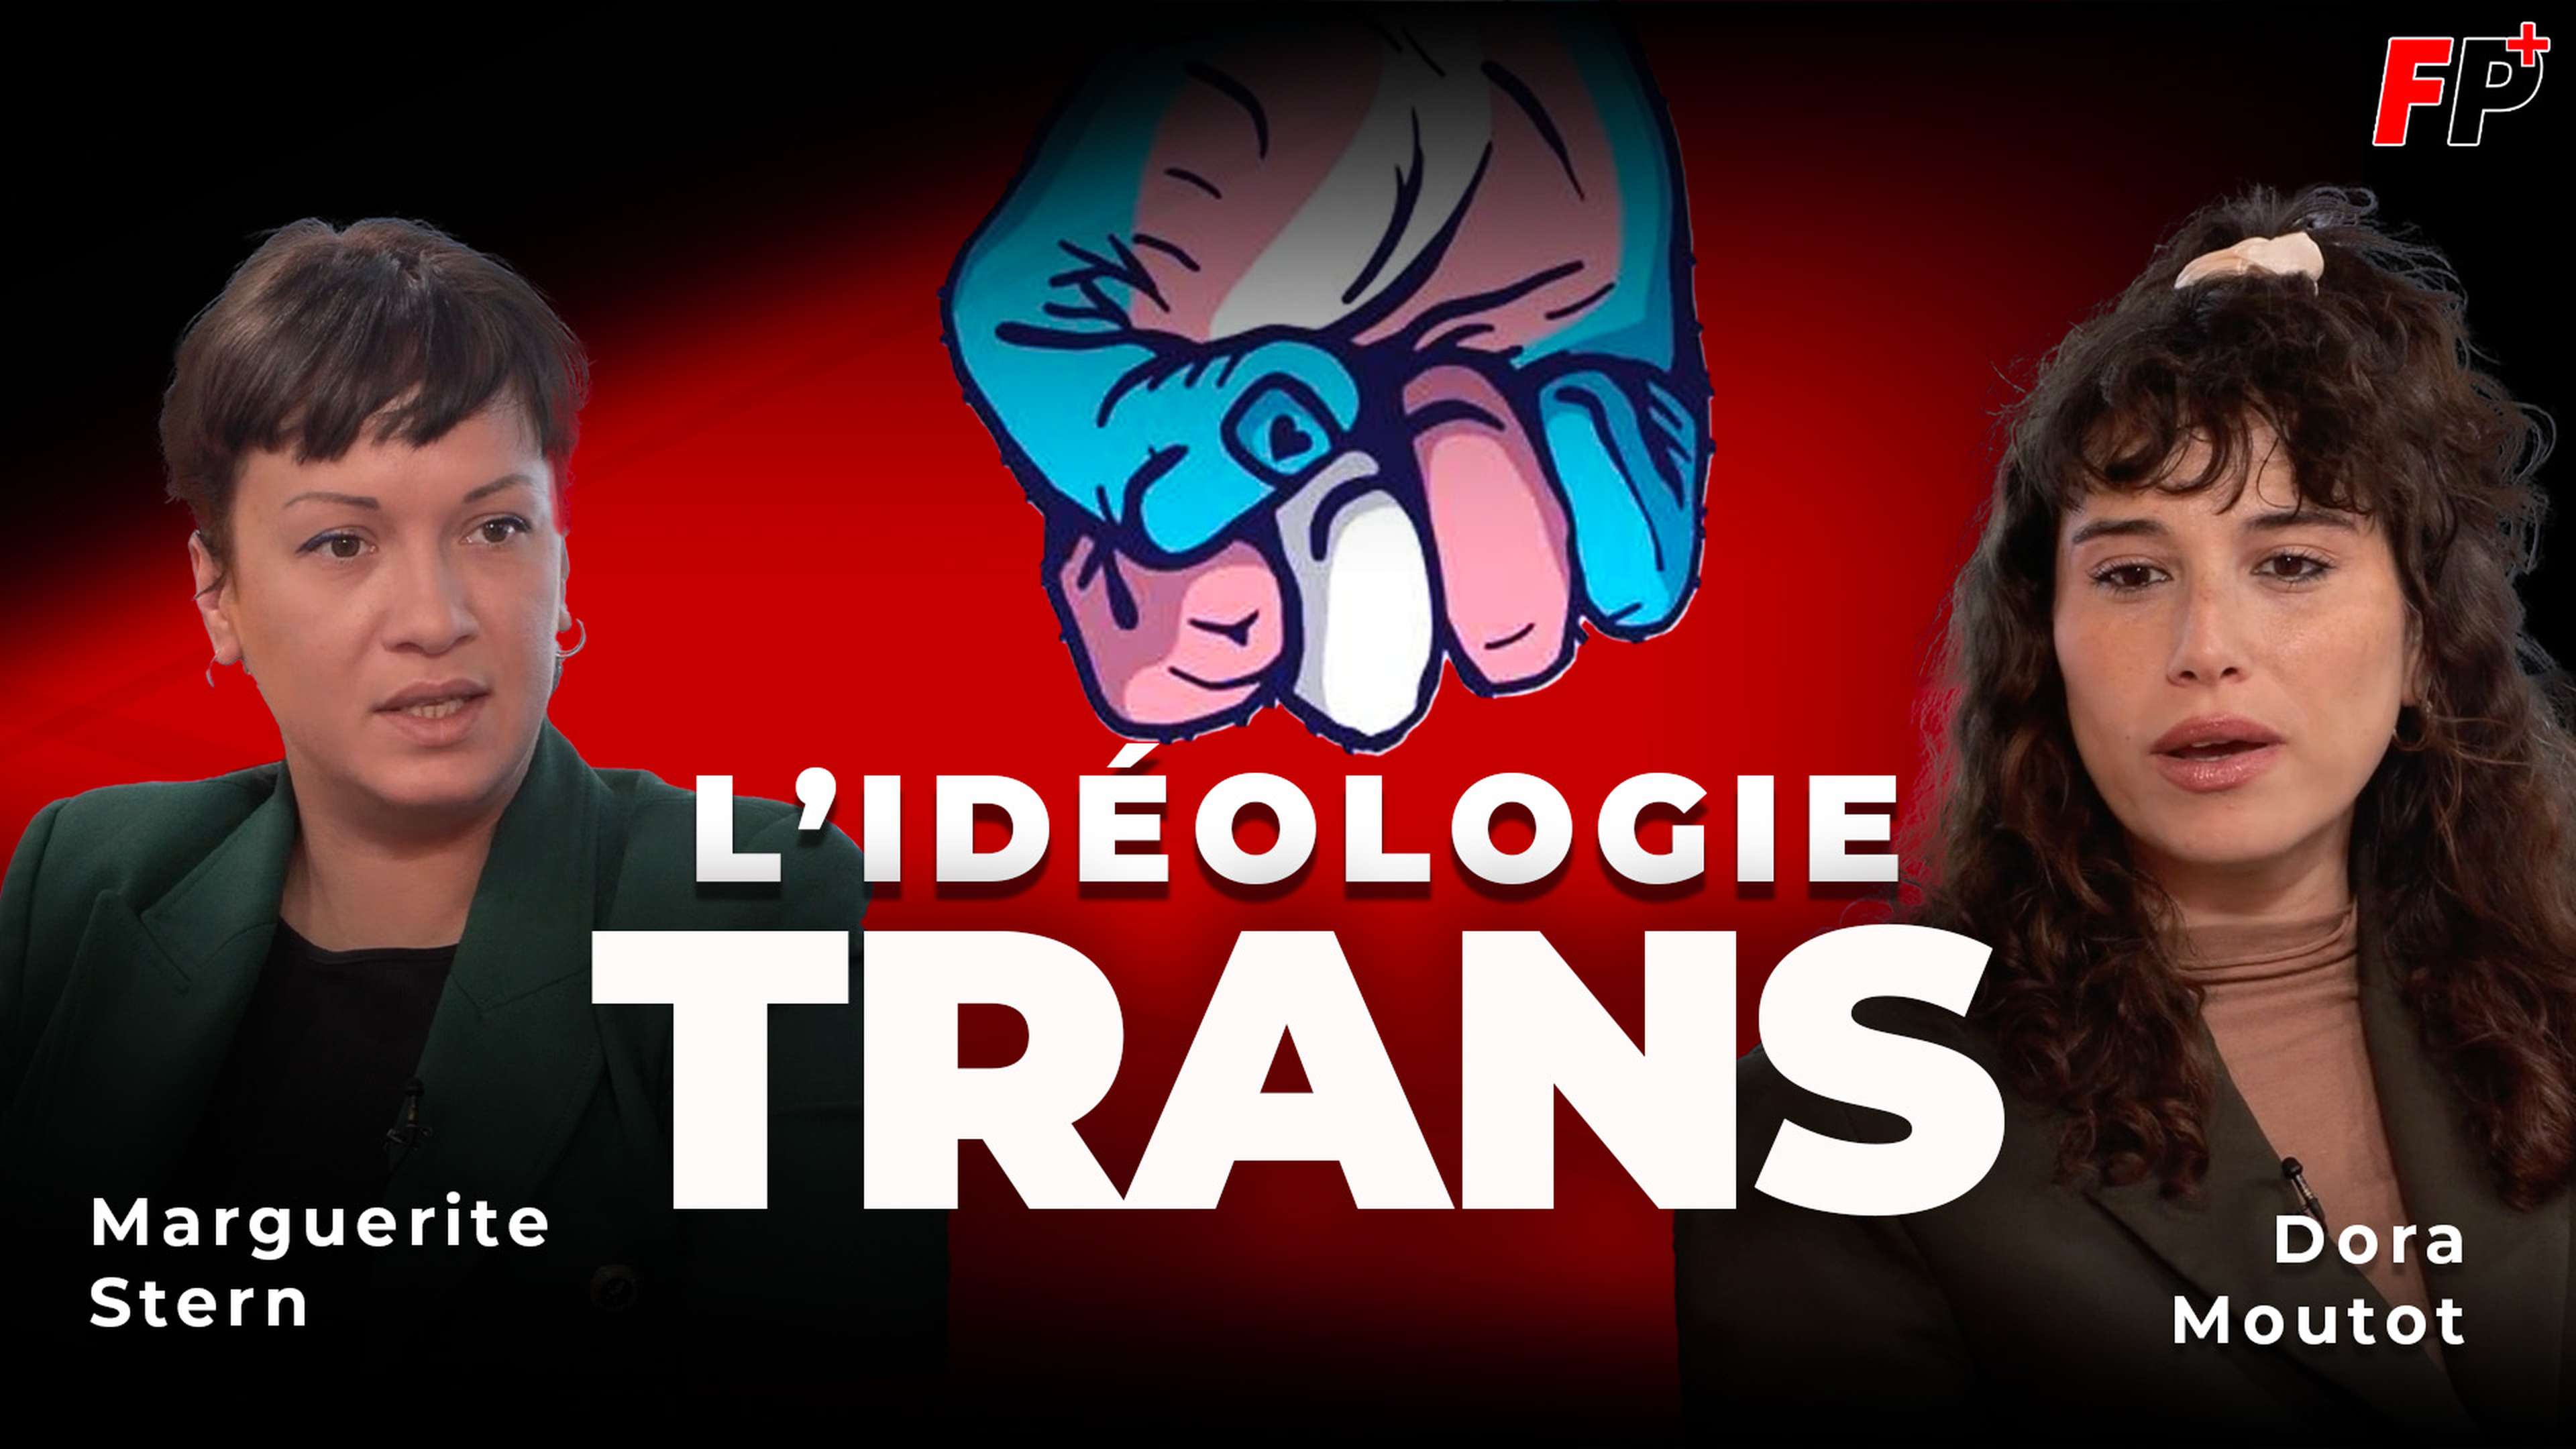 ideologie-transgenre-trans-dora-moutot-marguerite-stern-transmania